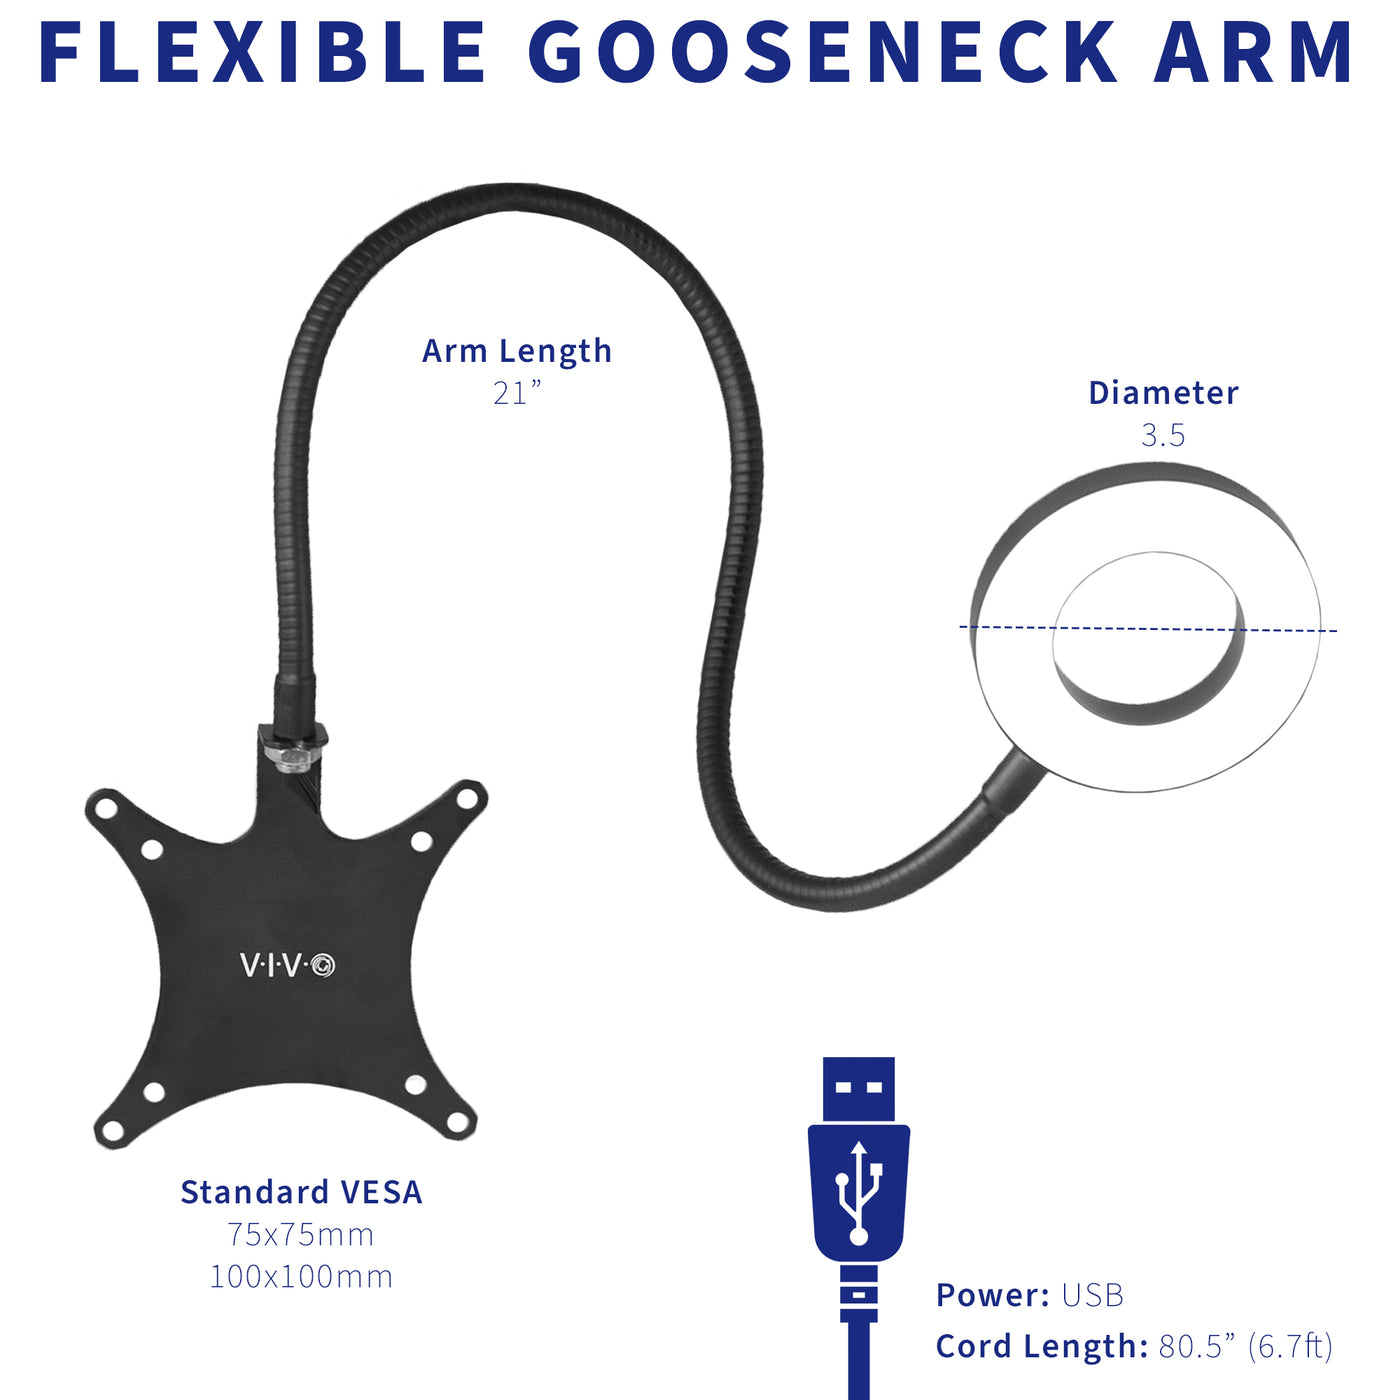 Long flexible gooseneck arm adapts to any workspace setup.